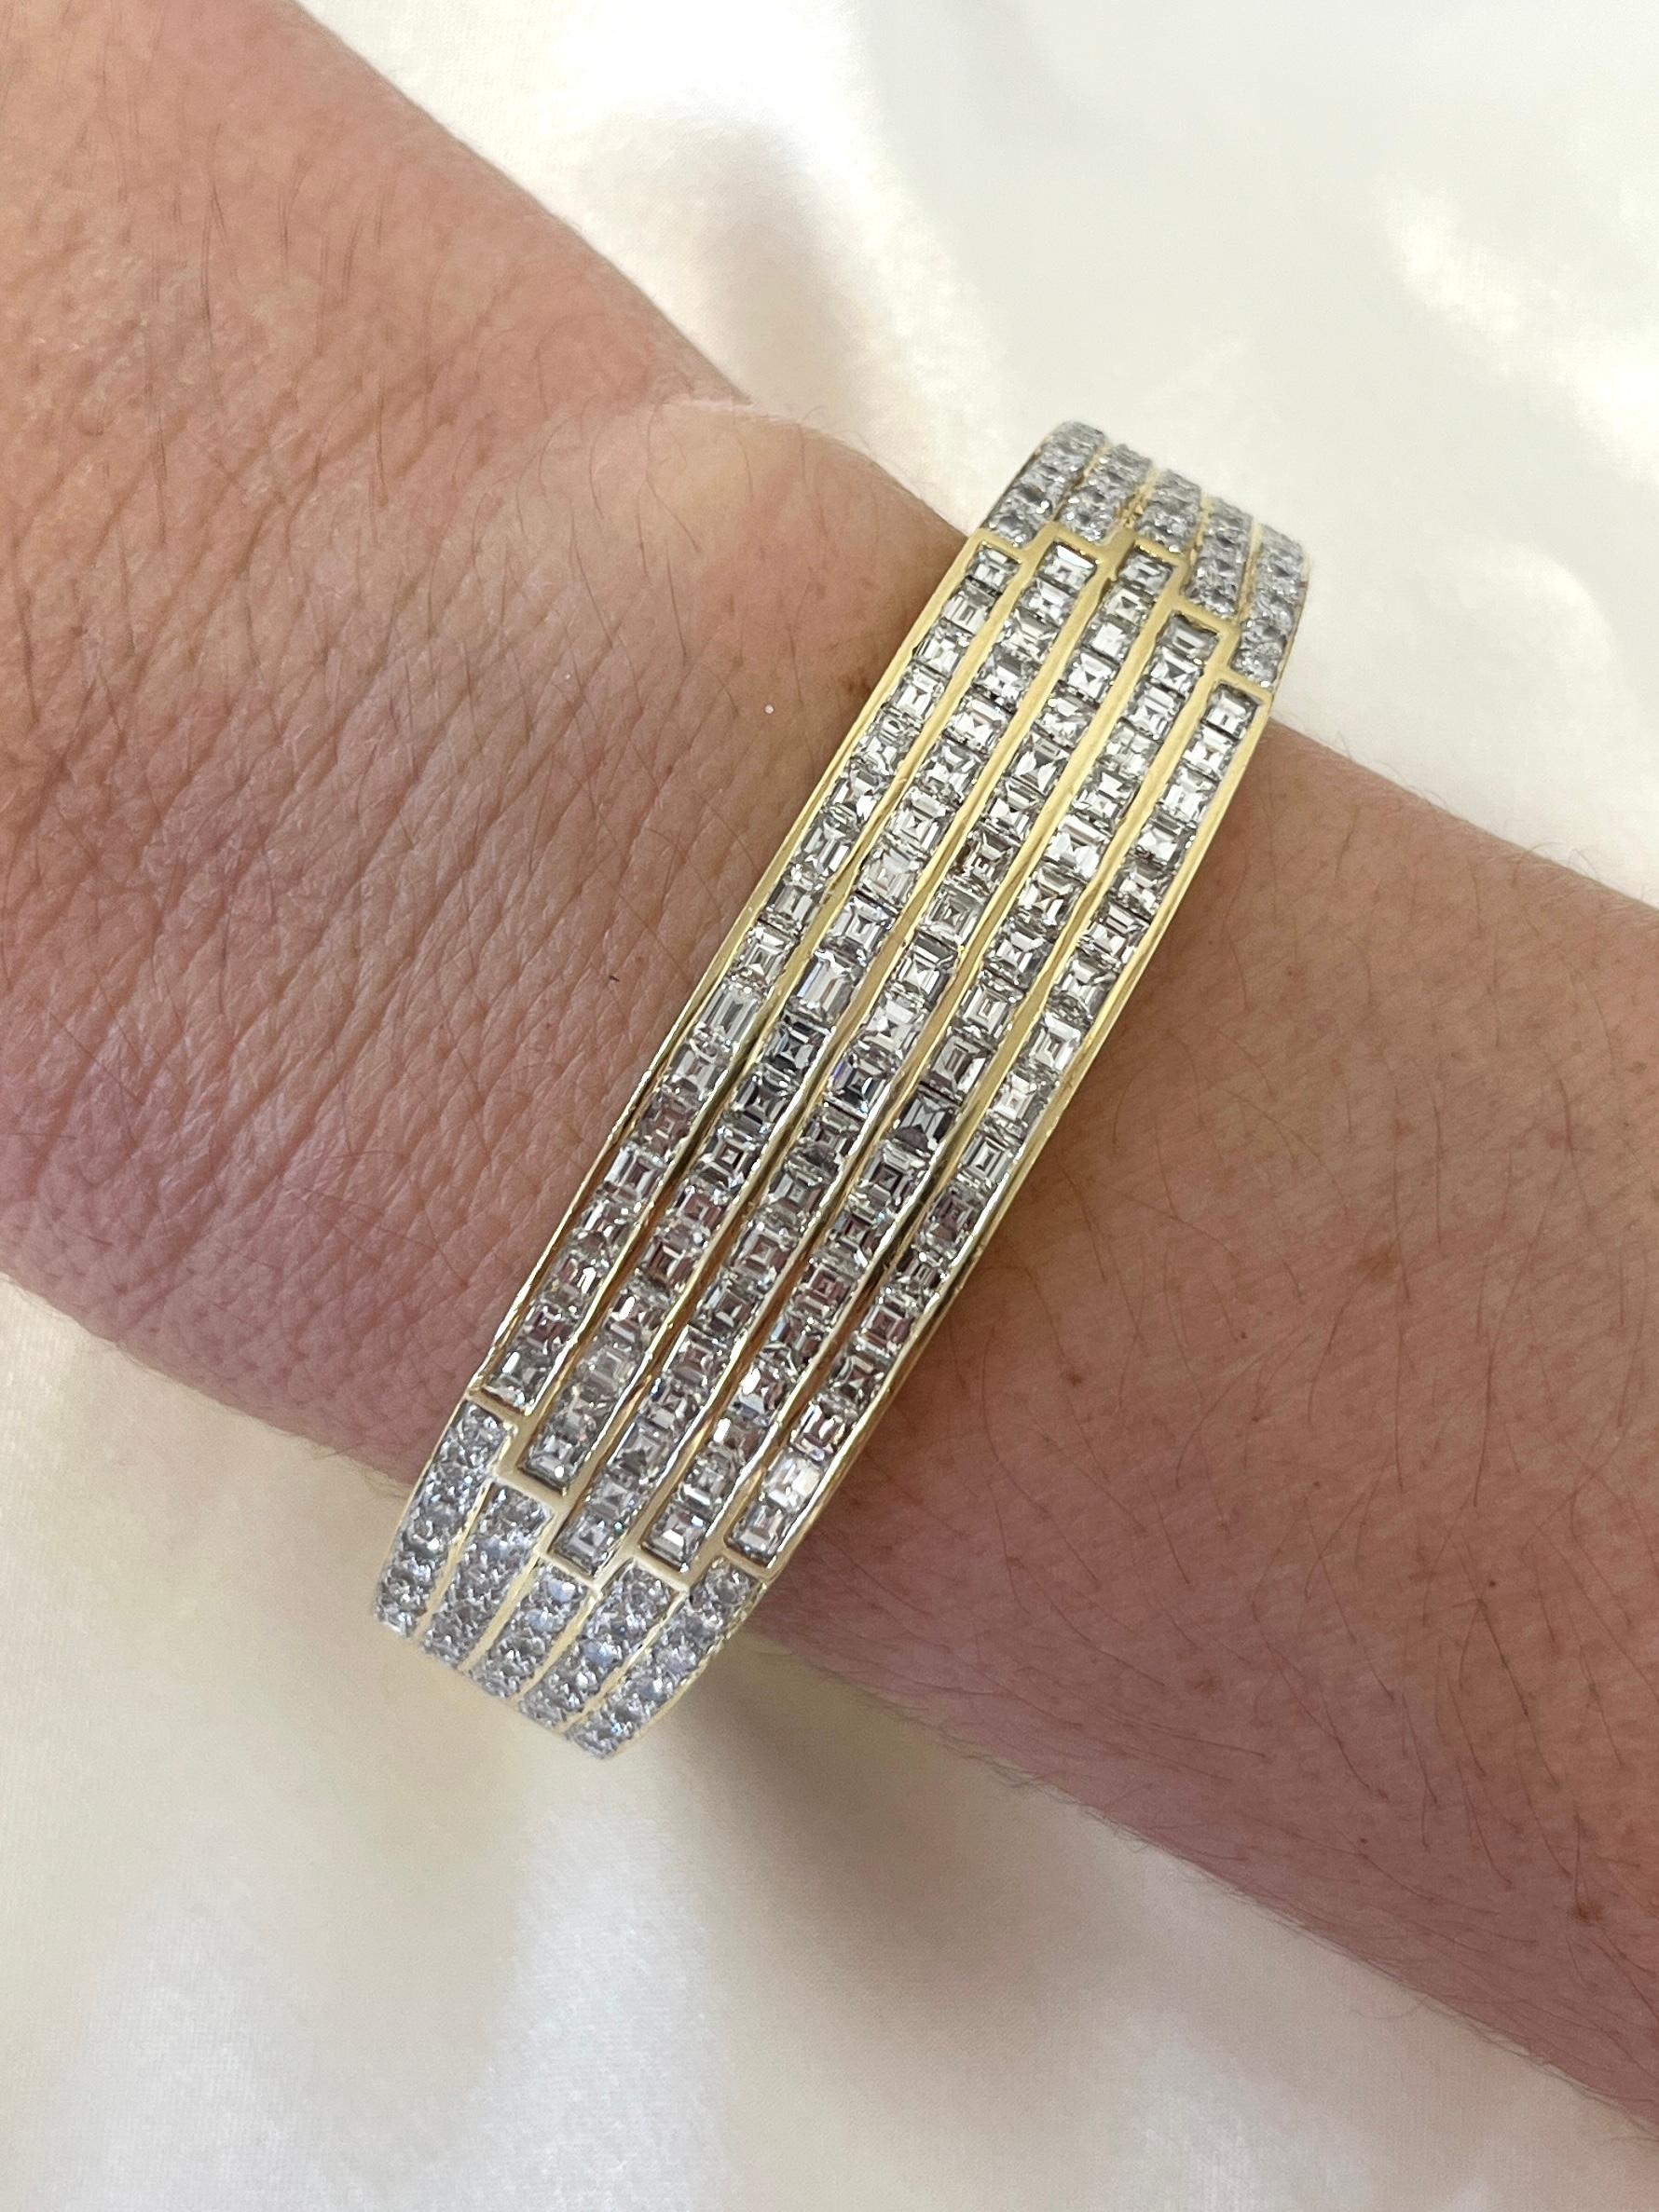 10 Carat Baguette Cut Multi-Row Diamond Encrusted Bangle Bracelet in 18k Gold For Sale 4